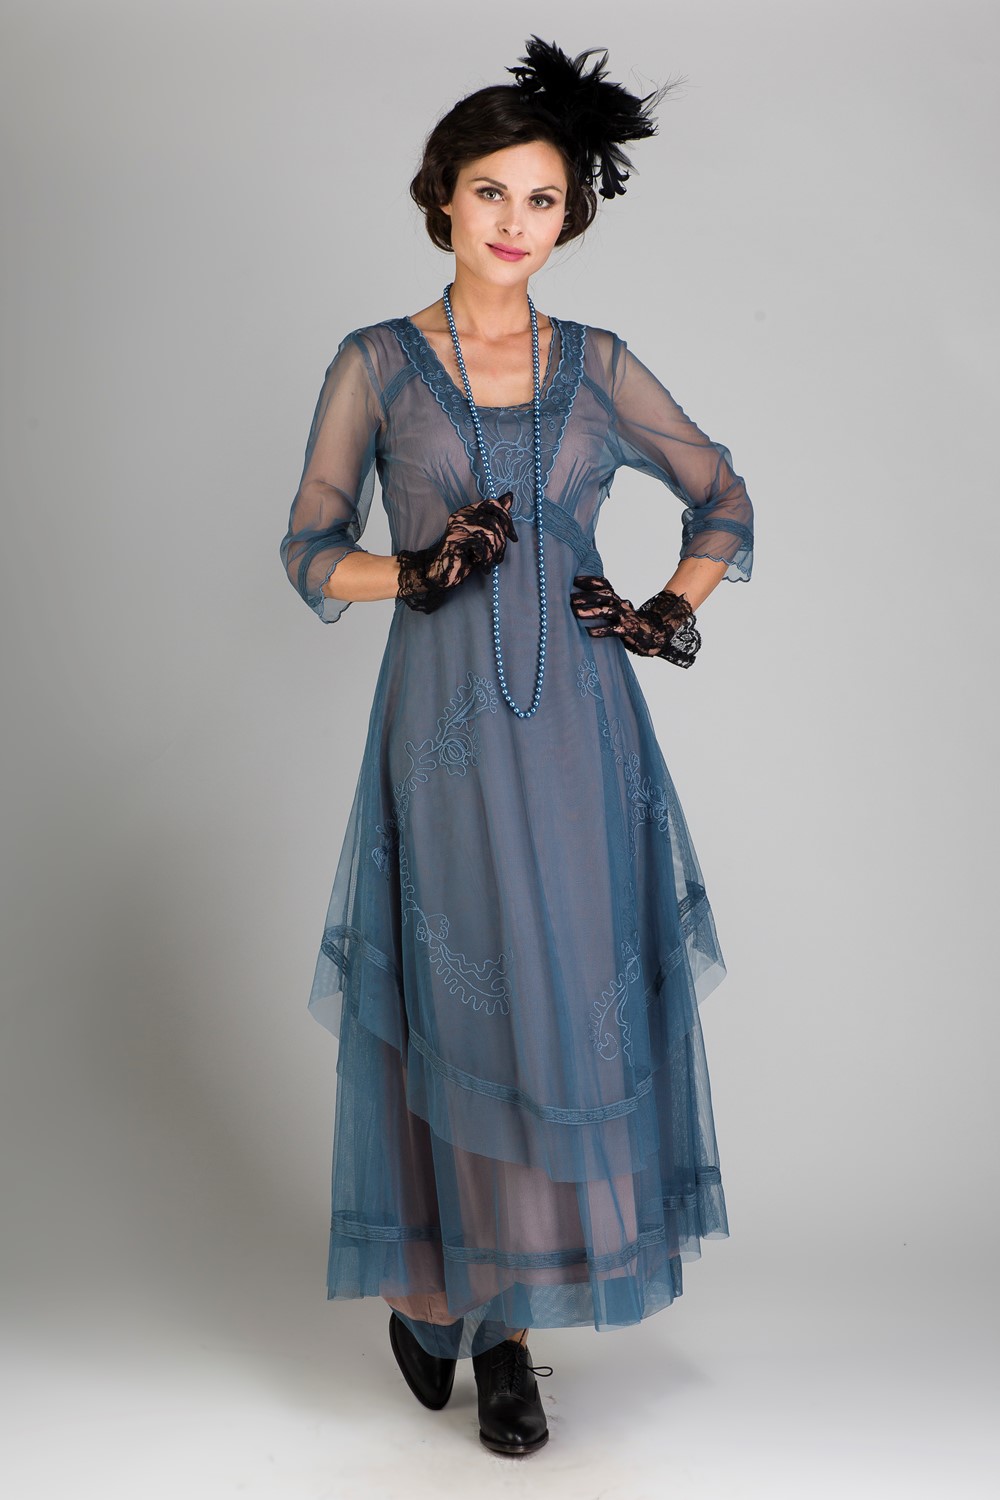 Nataya - Romantic Dresses by Artisans for Vintage Lovers at Wardrobe ...